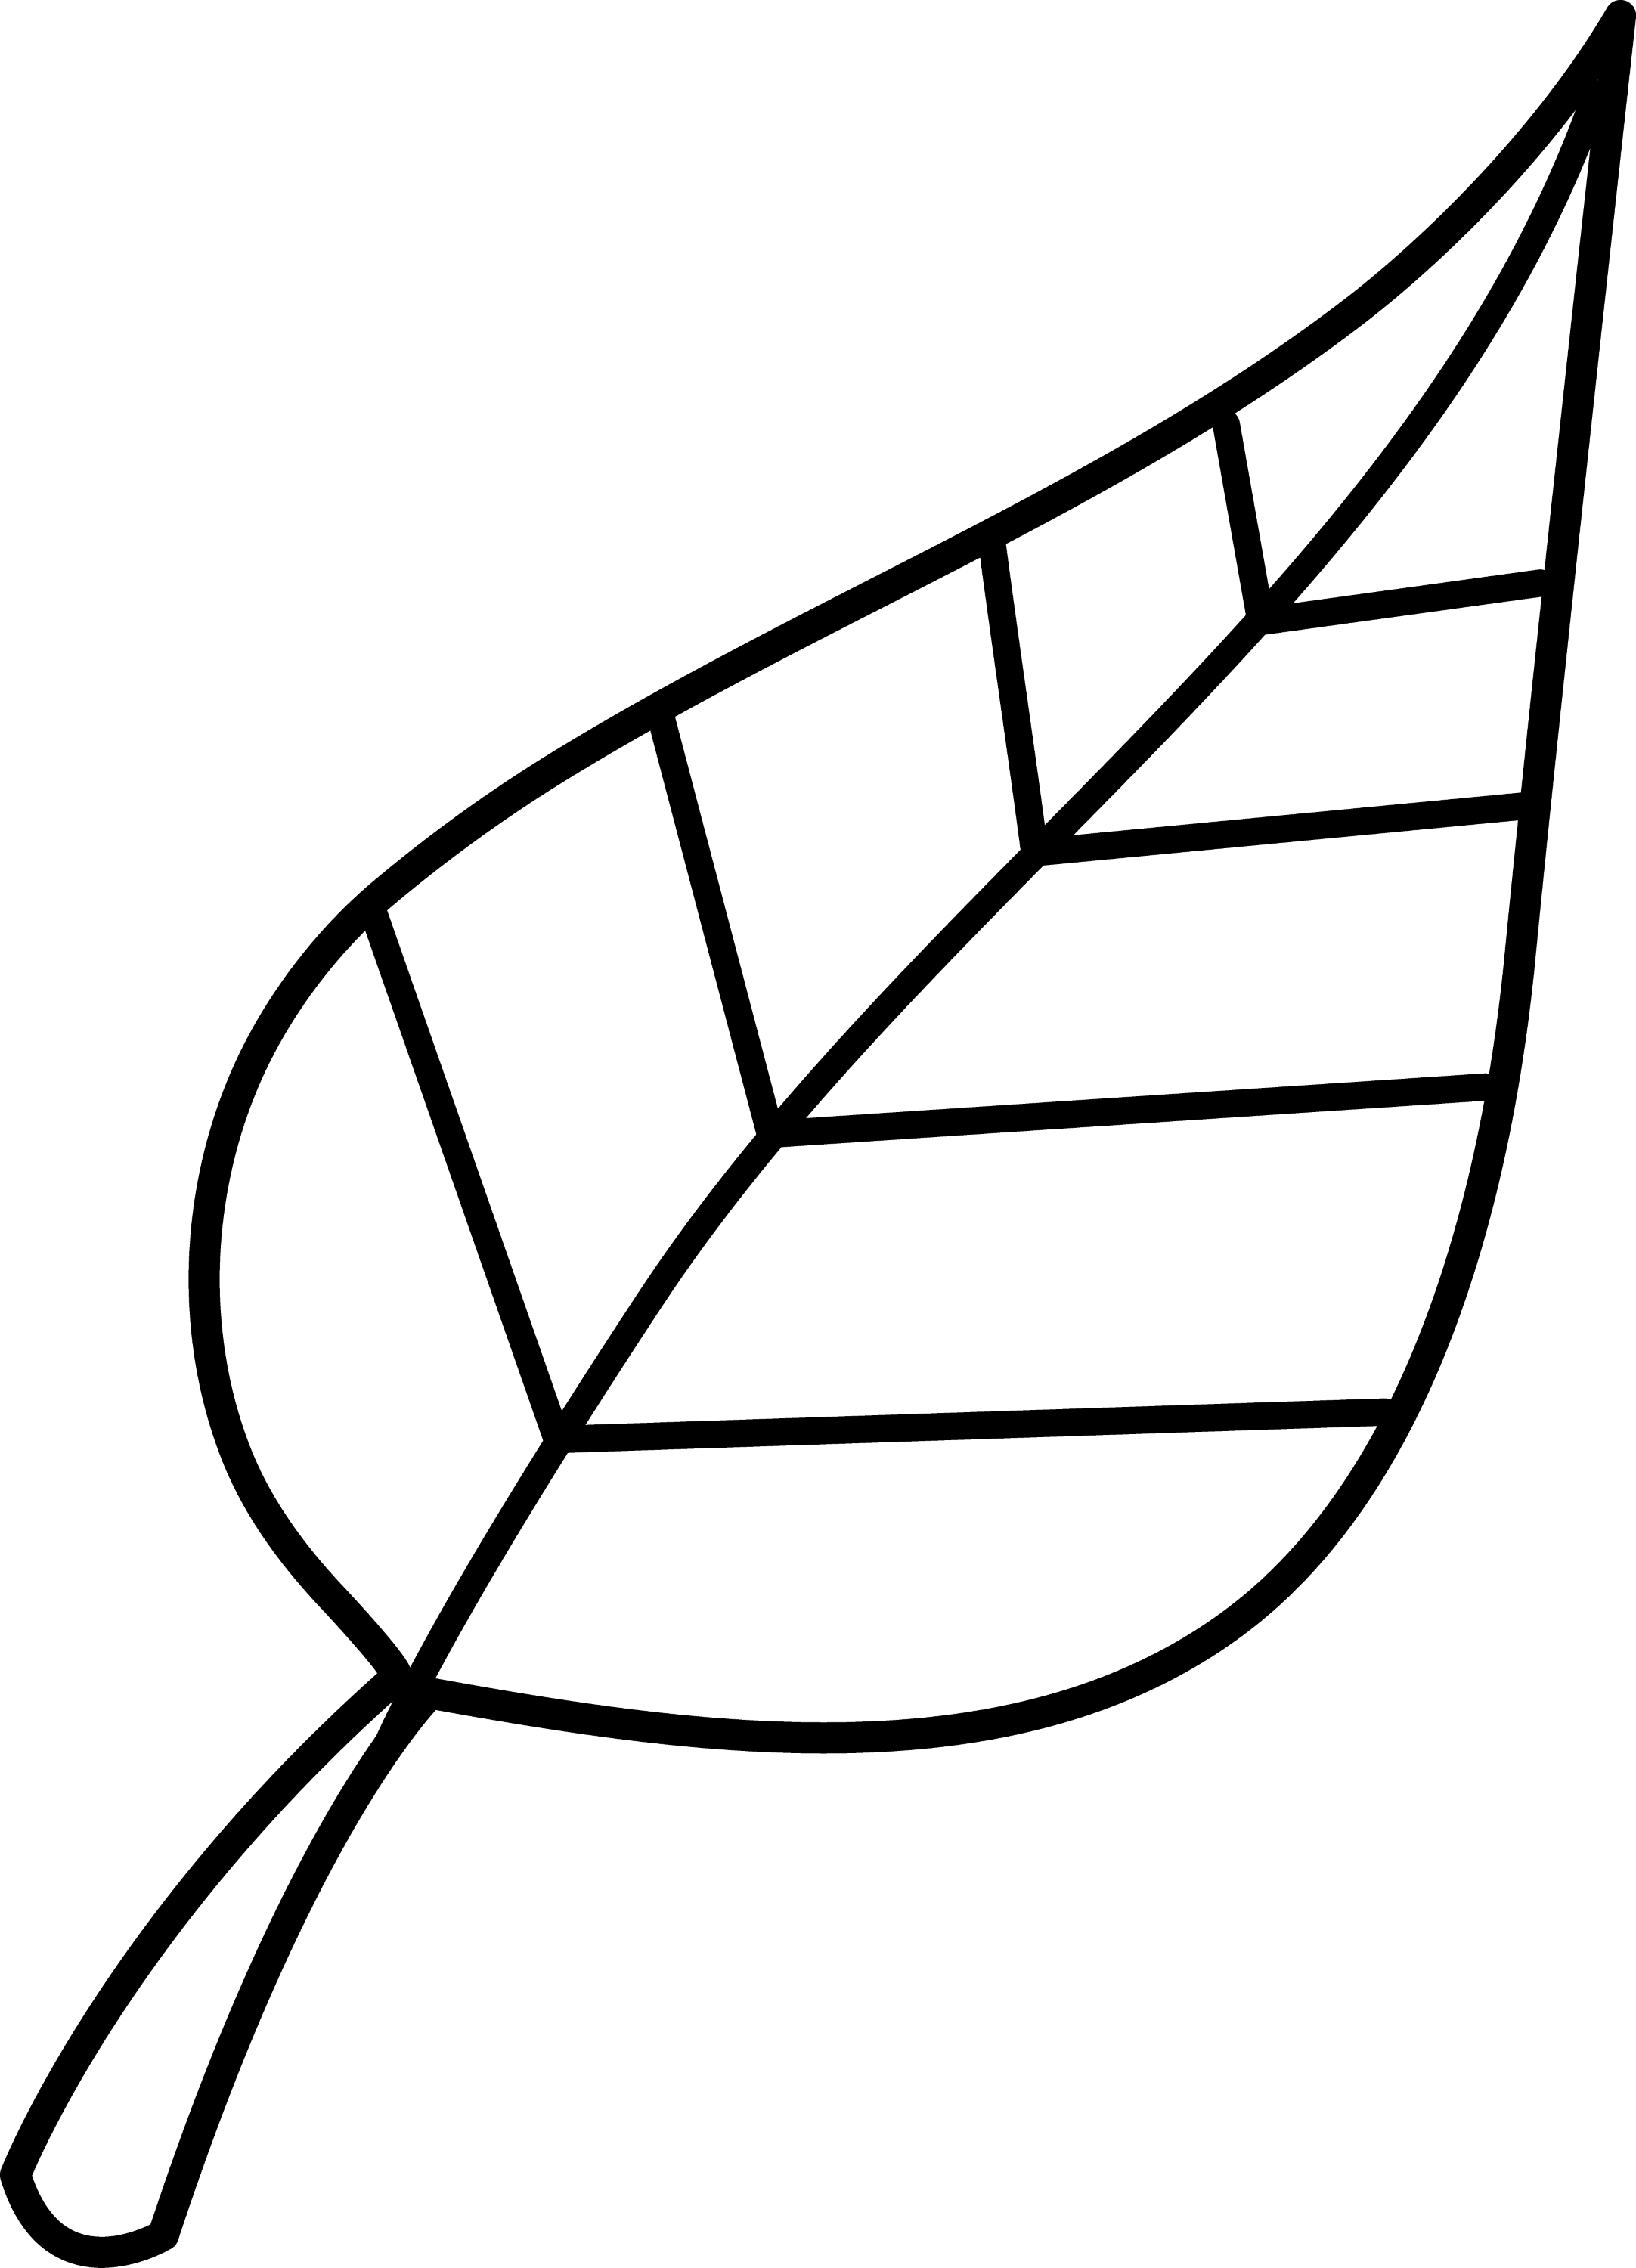 Colorable Line Art of a Leaf - Free Clip Art